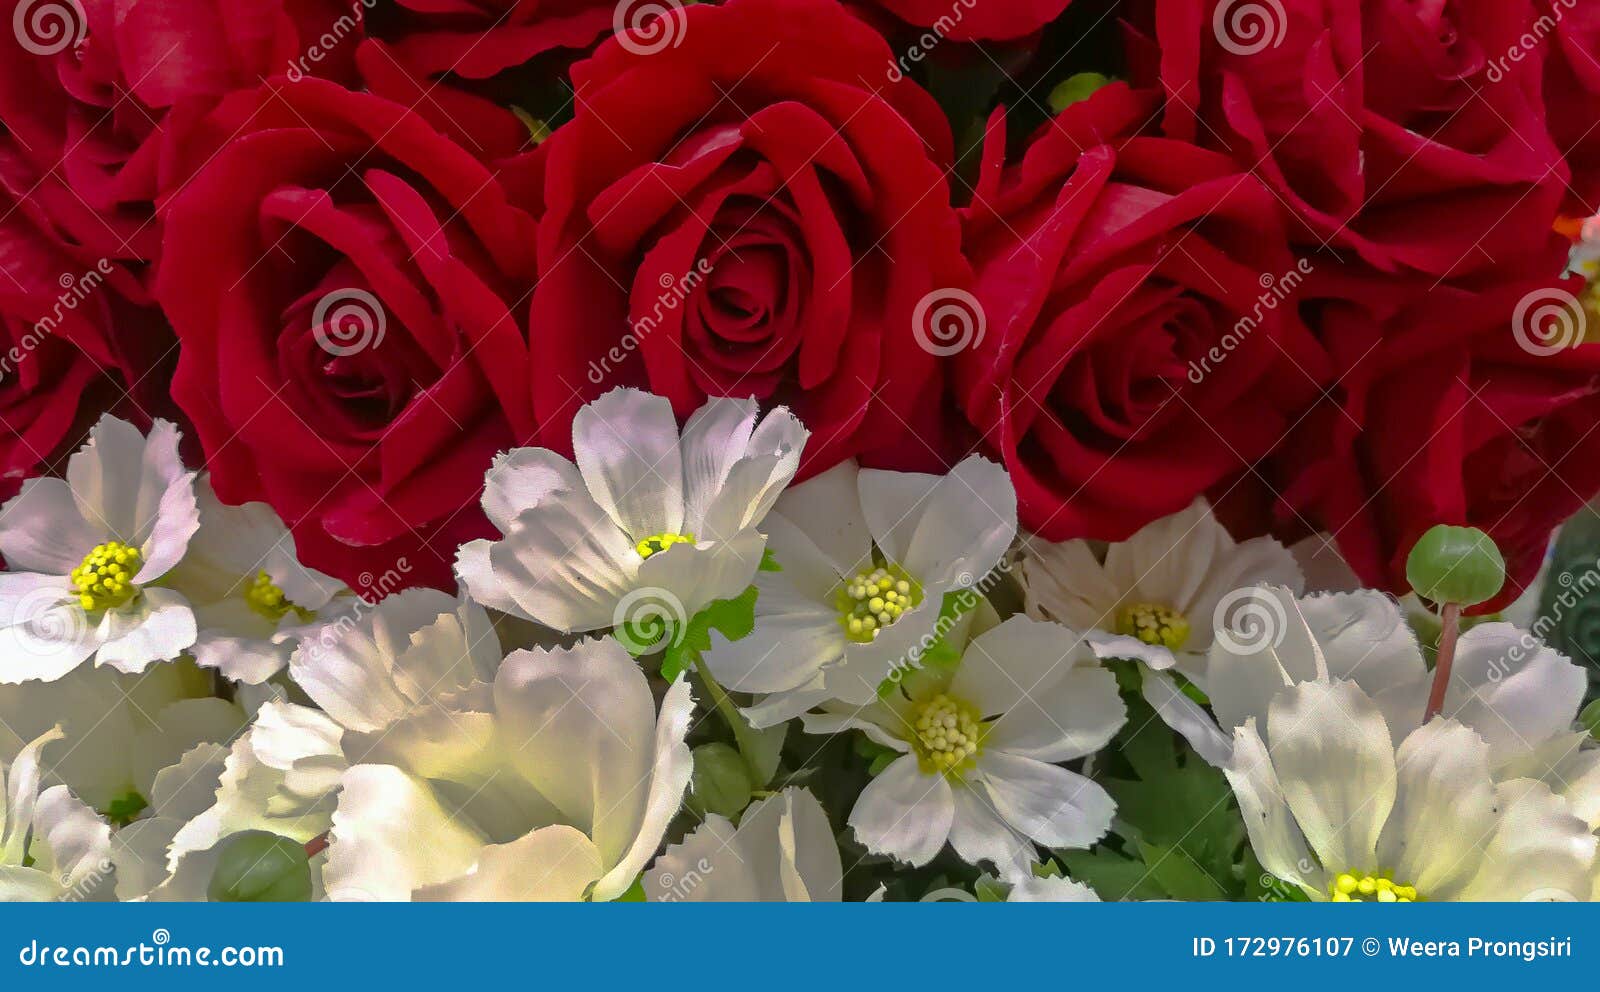 ukraine, anniversary, arrangement, beauty, bouquet